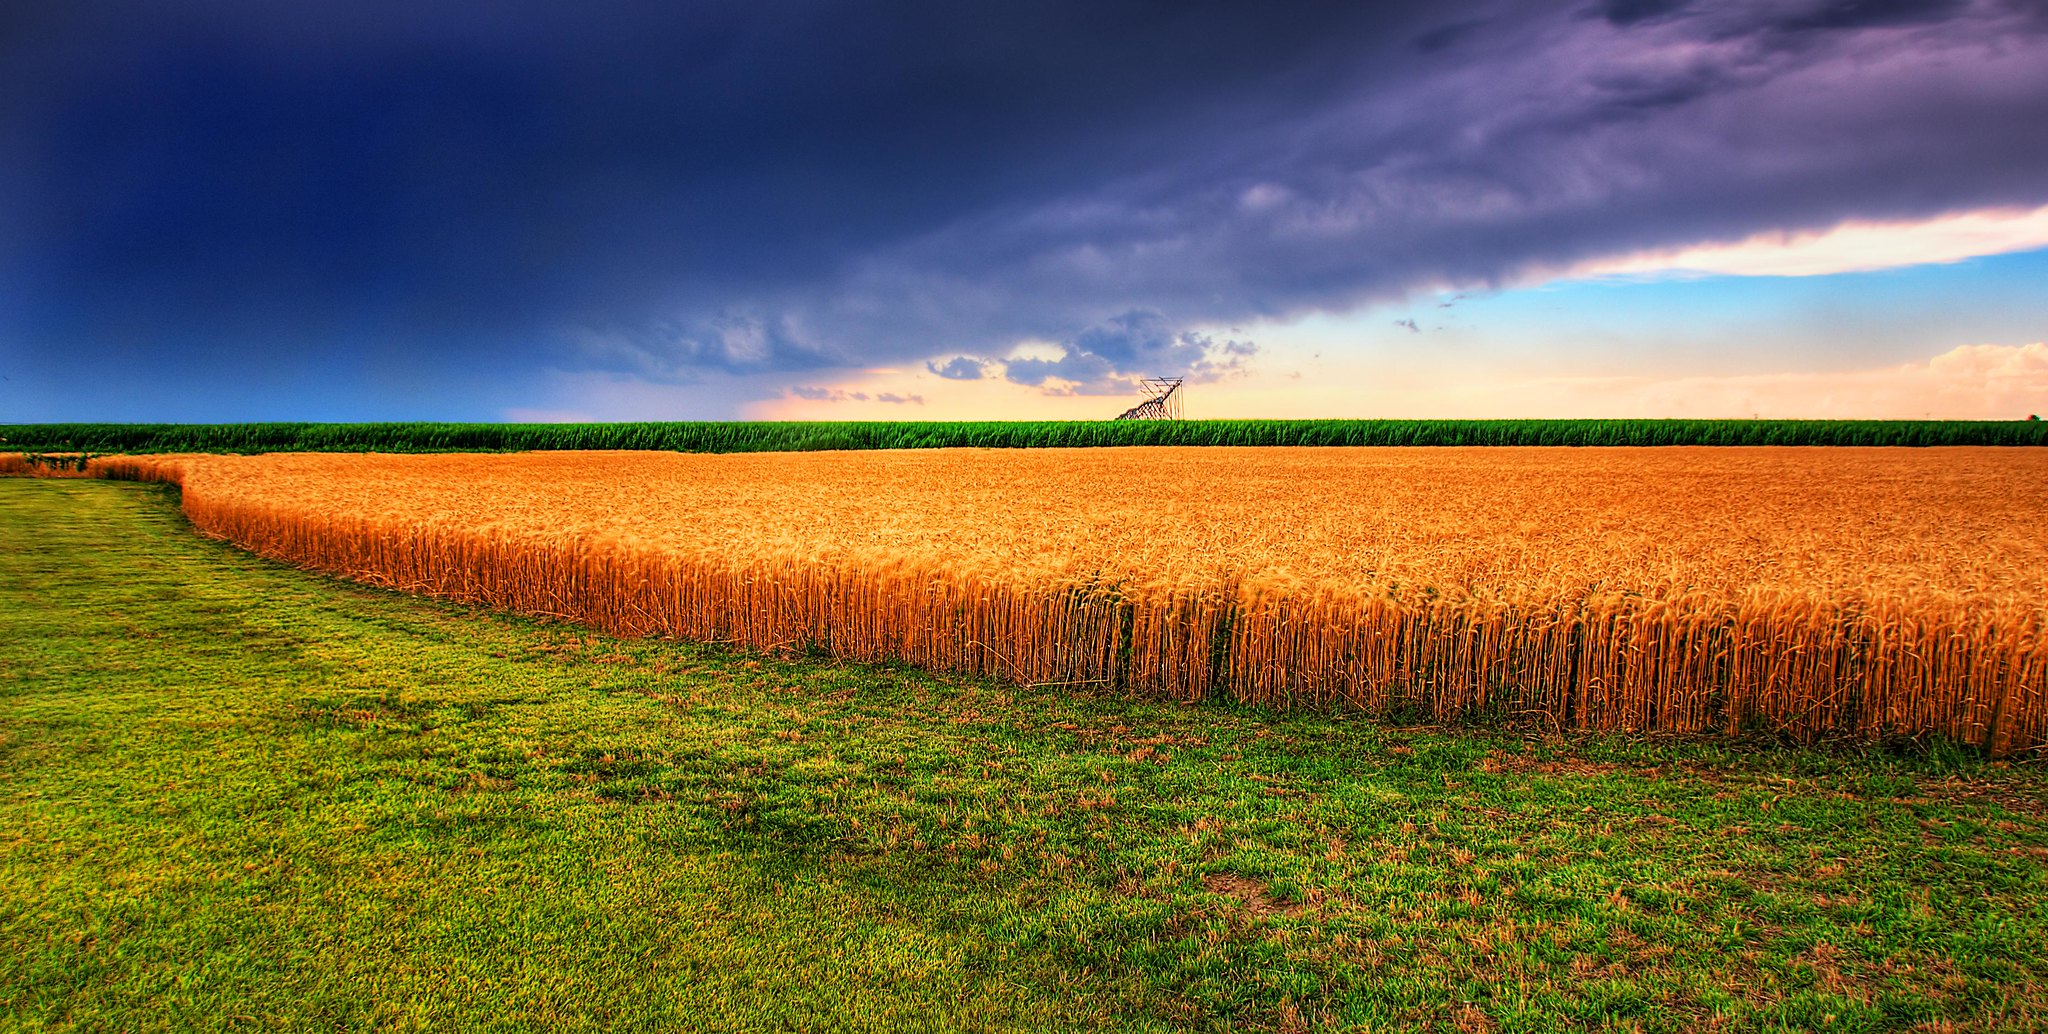 Kansas summer wheat field and storm